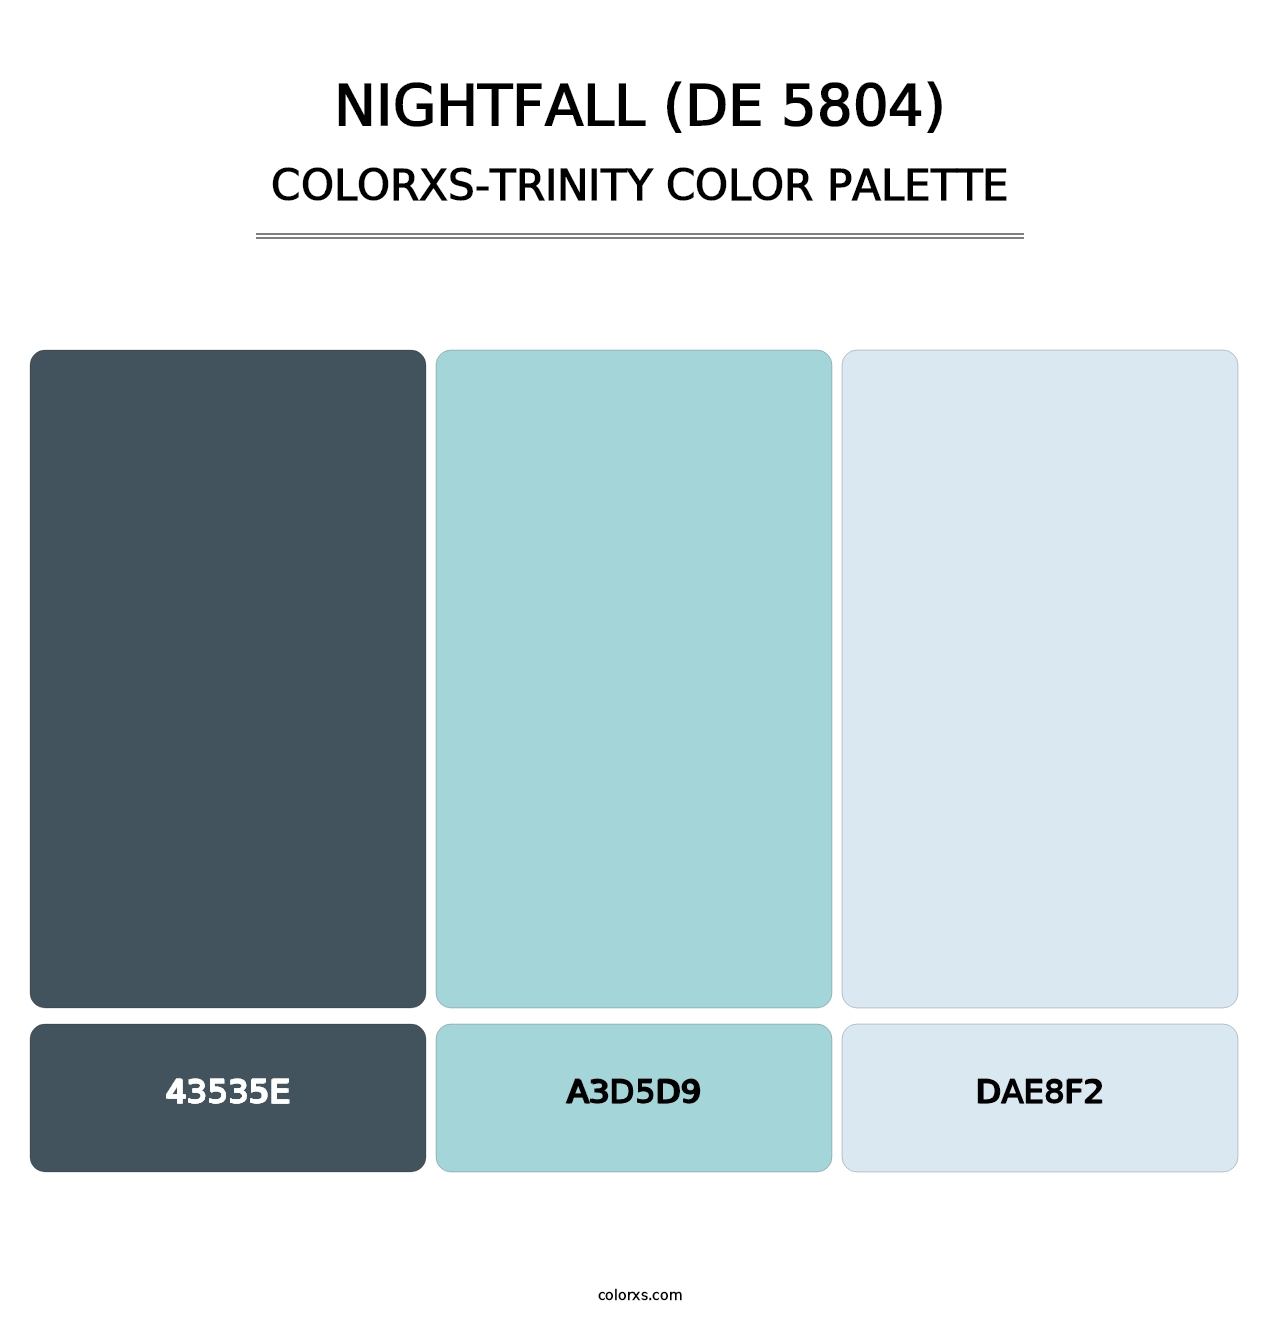 Nightfall (DE 5804) - Colorxs Trinity Palette